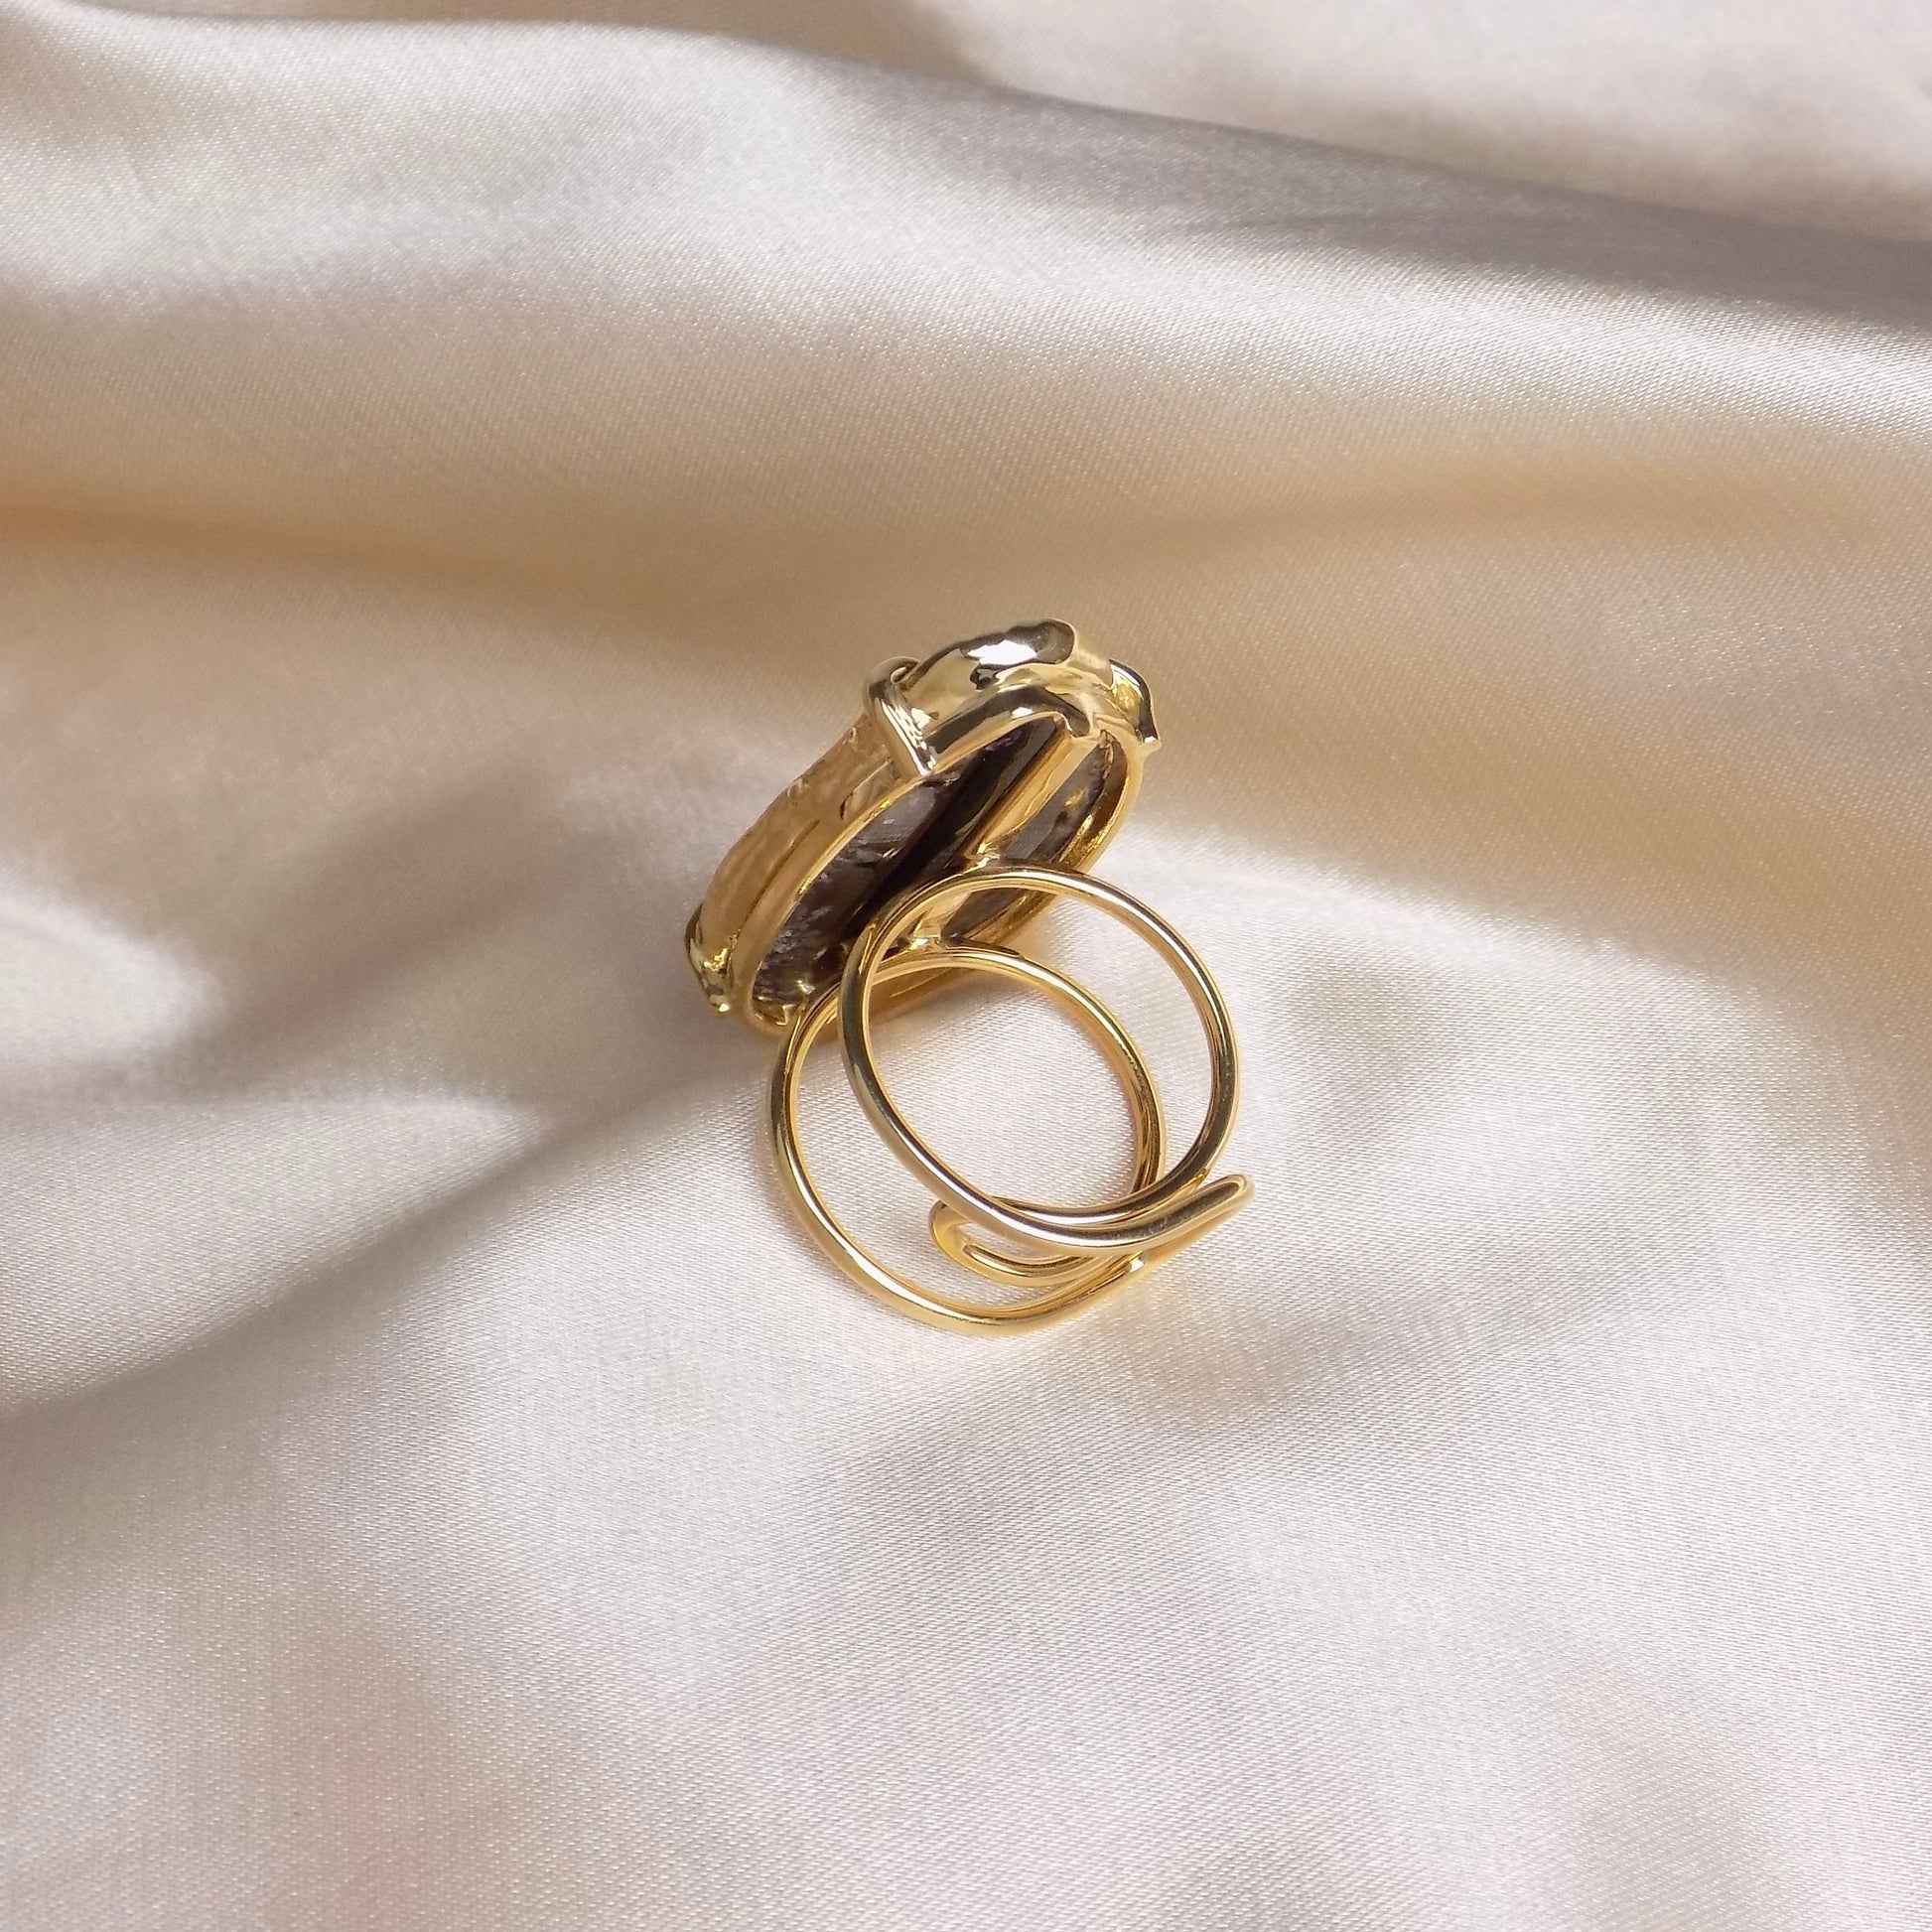 Boho Agate Ring Black, Natural Geode Ring Adjustable, Large Crystal Ring, Gift Women, G15-84